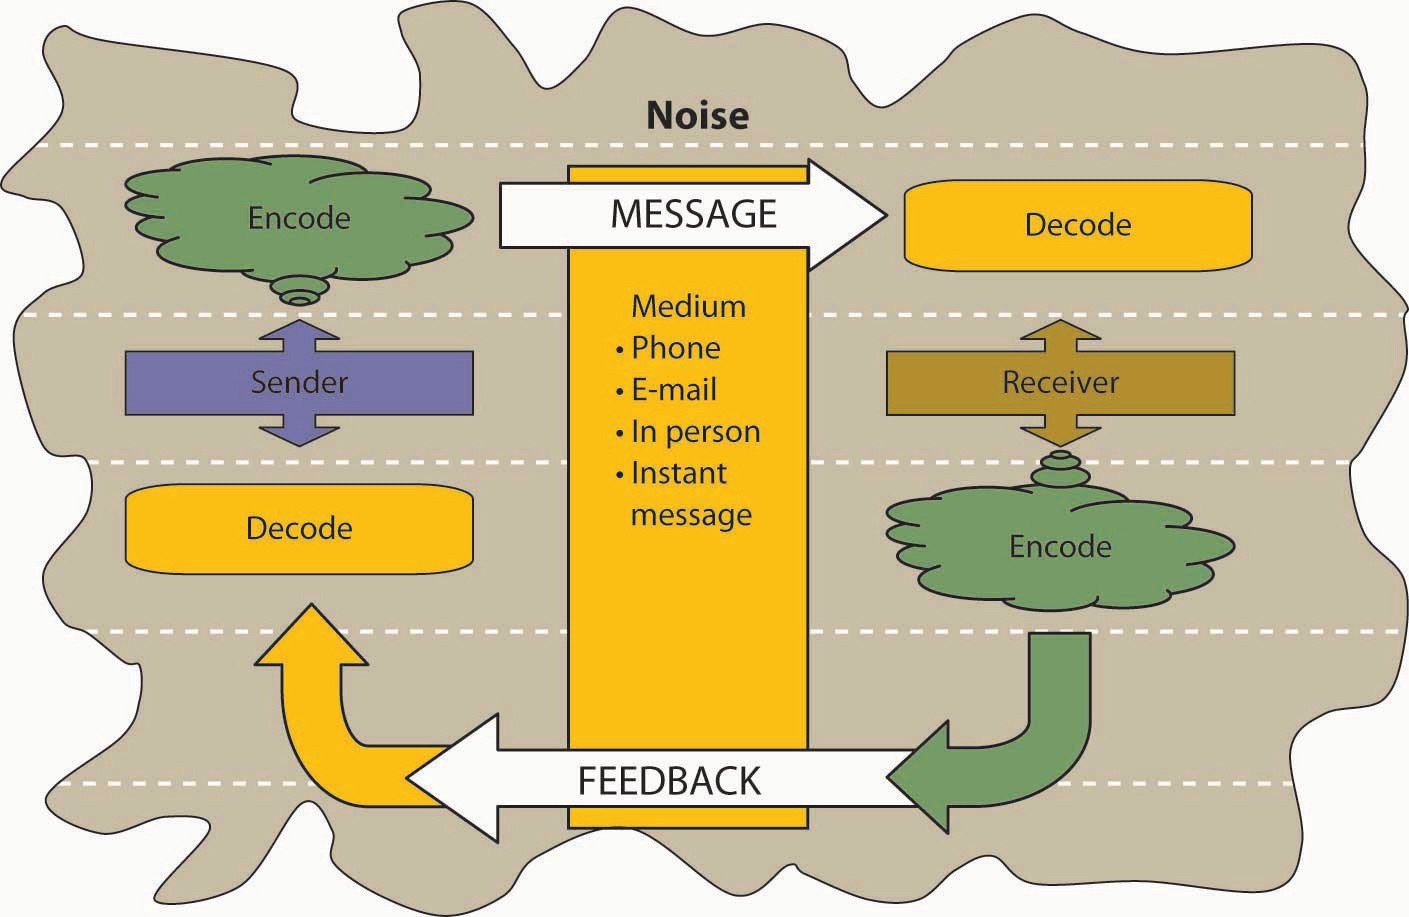 Figure 8.3 Process Model of Communication